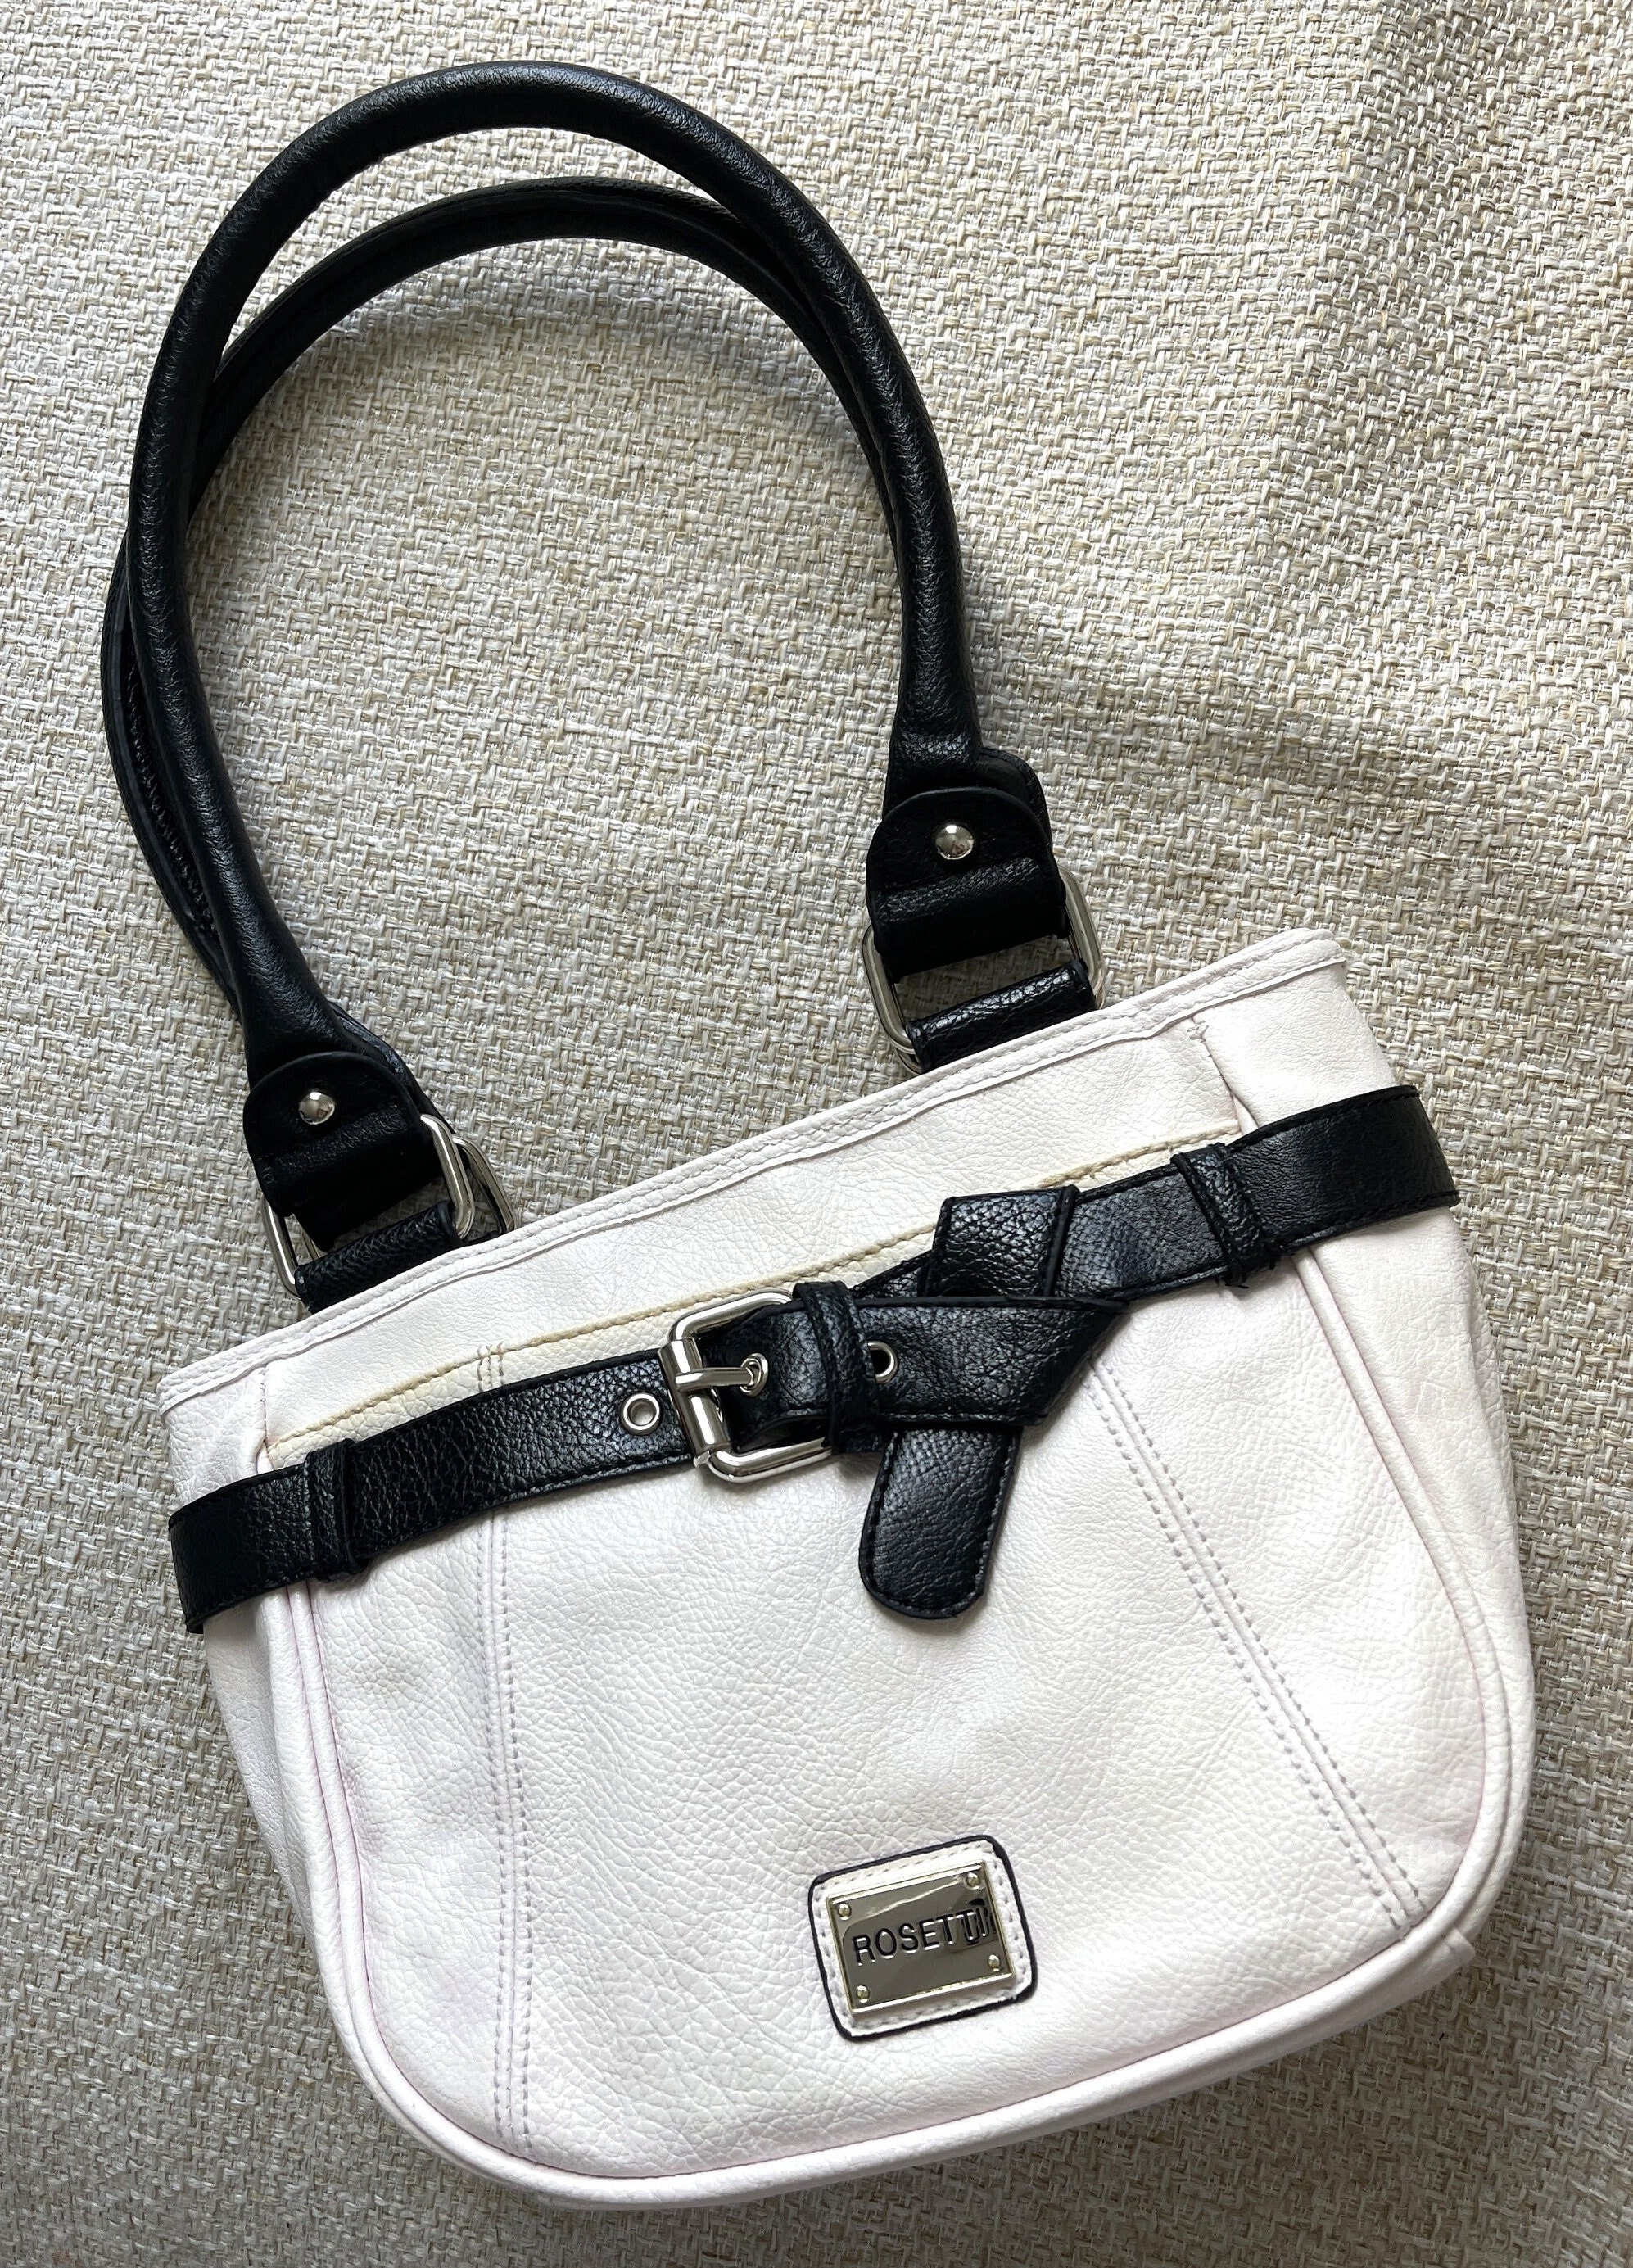 ✨Rosetti New York✨ vintage mini handbag 👜 •leather... - Depop